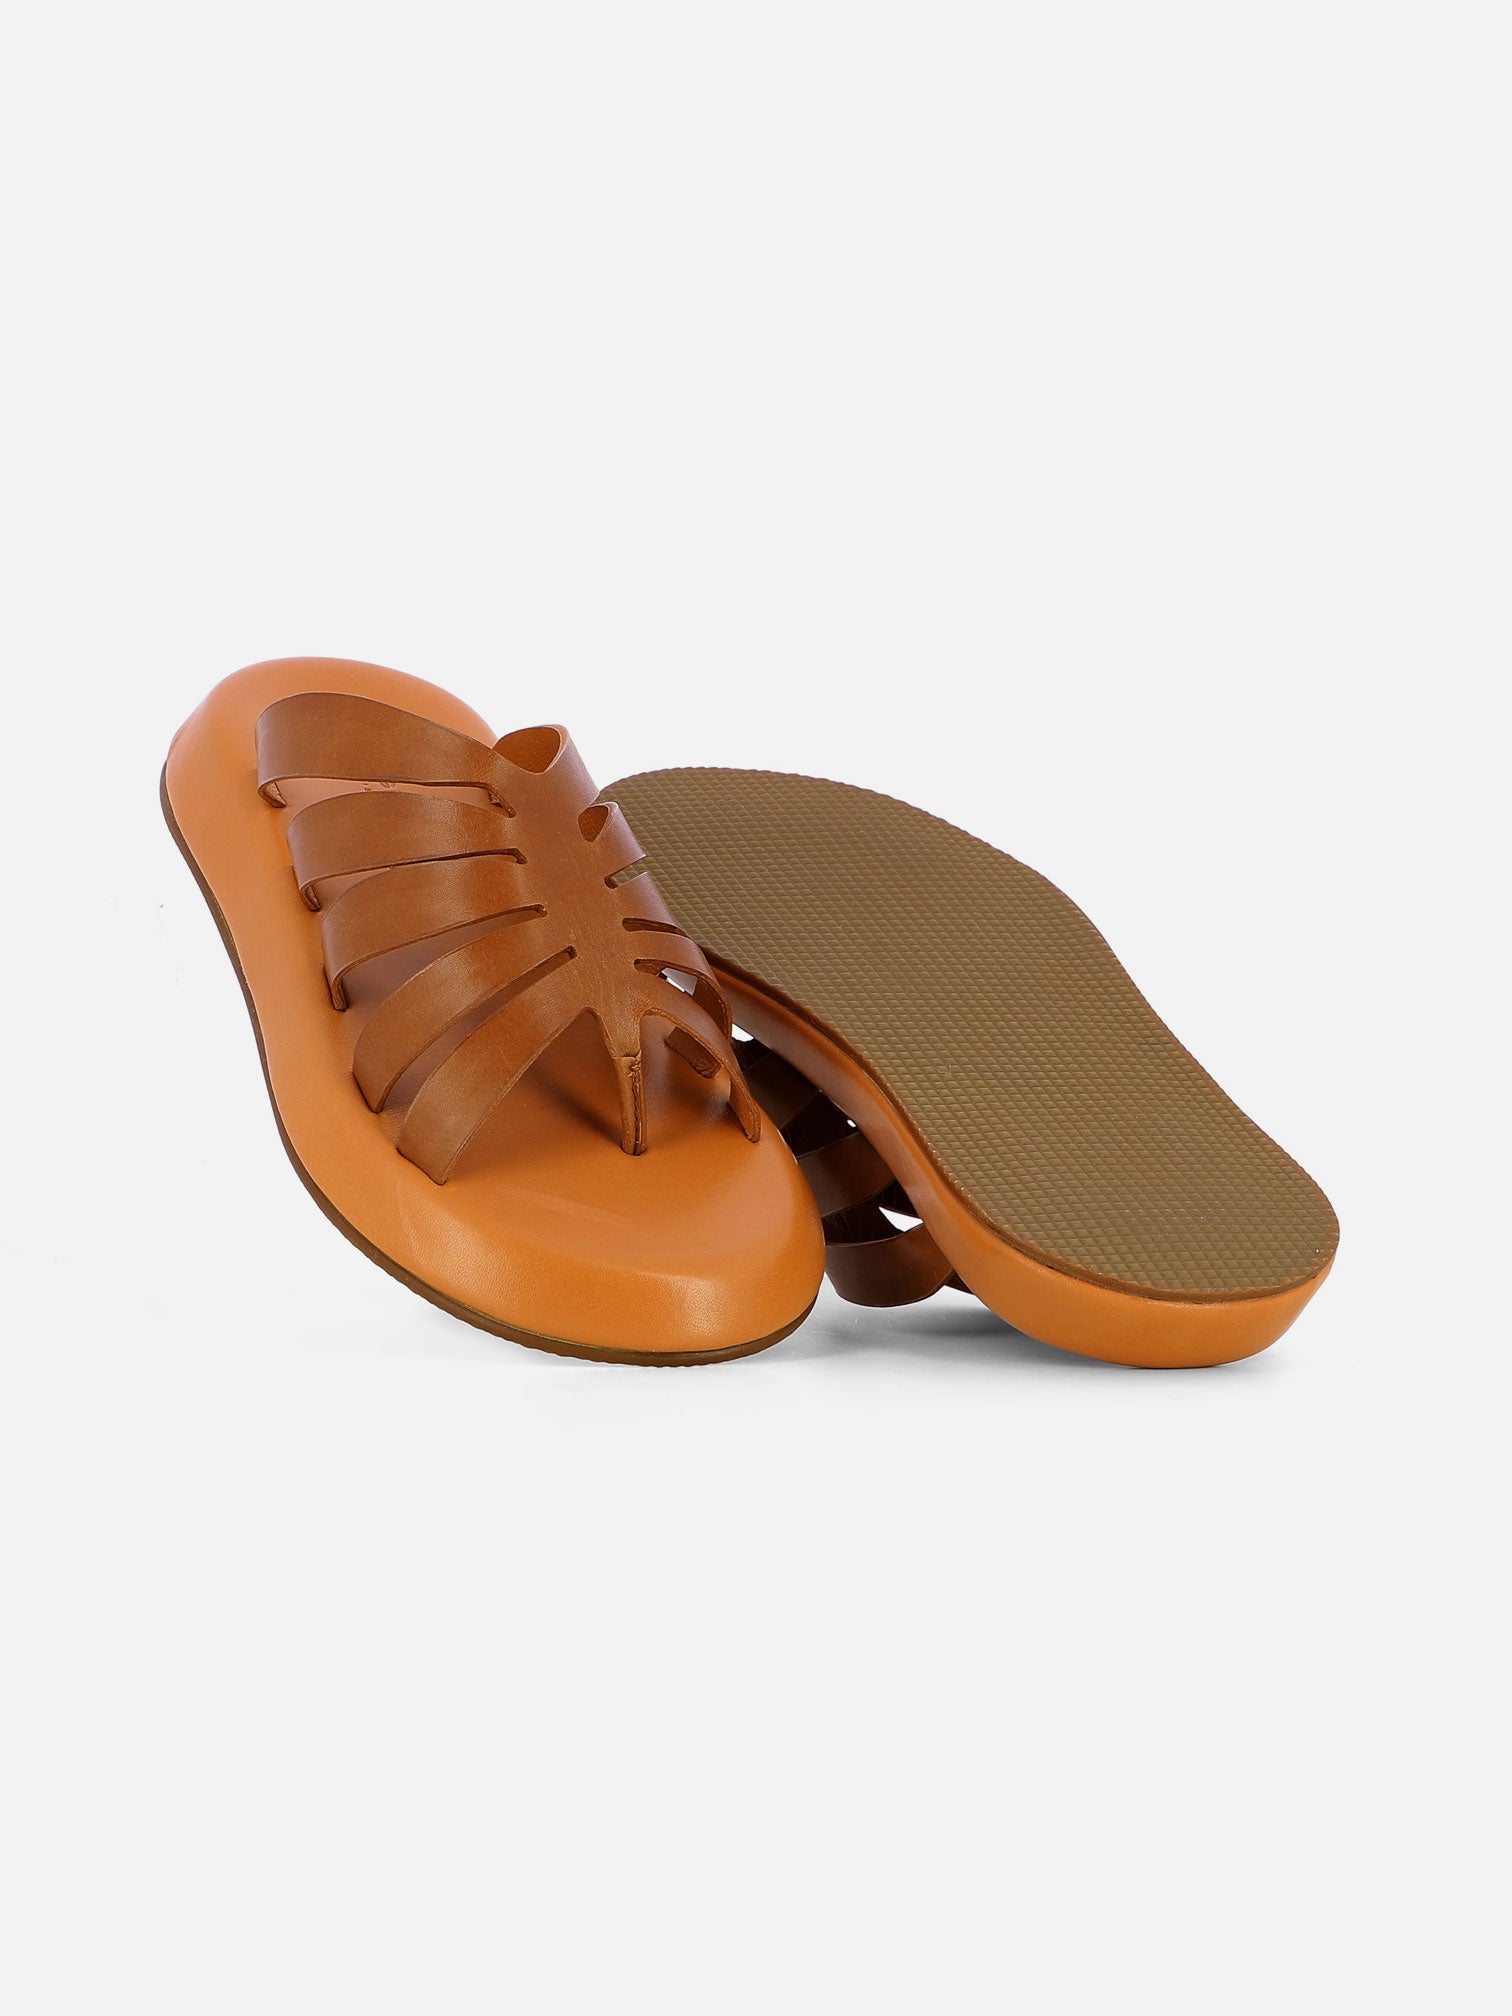 SANDALS - LAYEL sandals, vegetal calfskin brown - 3606063724753 - Clergerie Paris - Europe